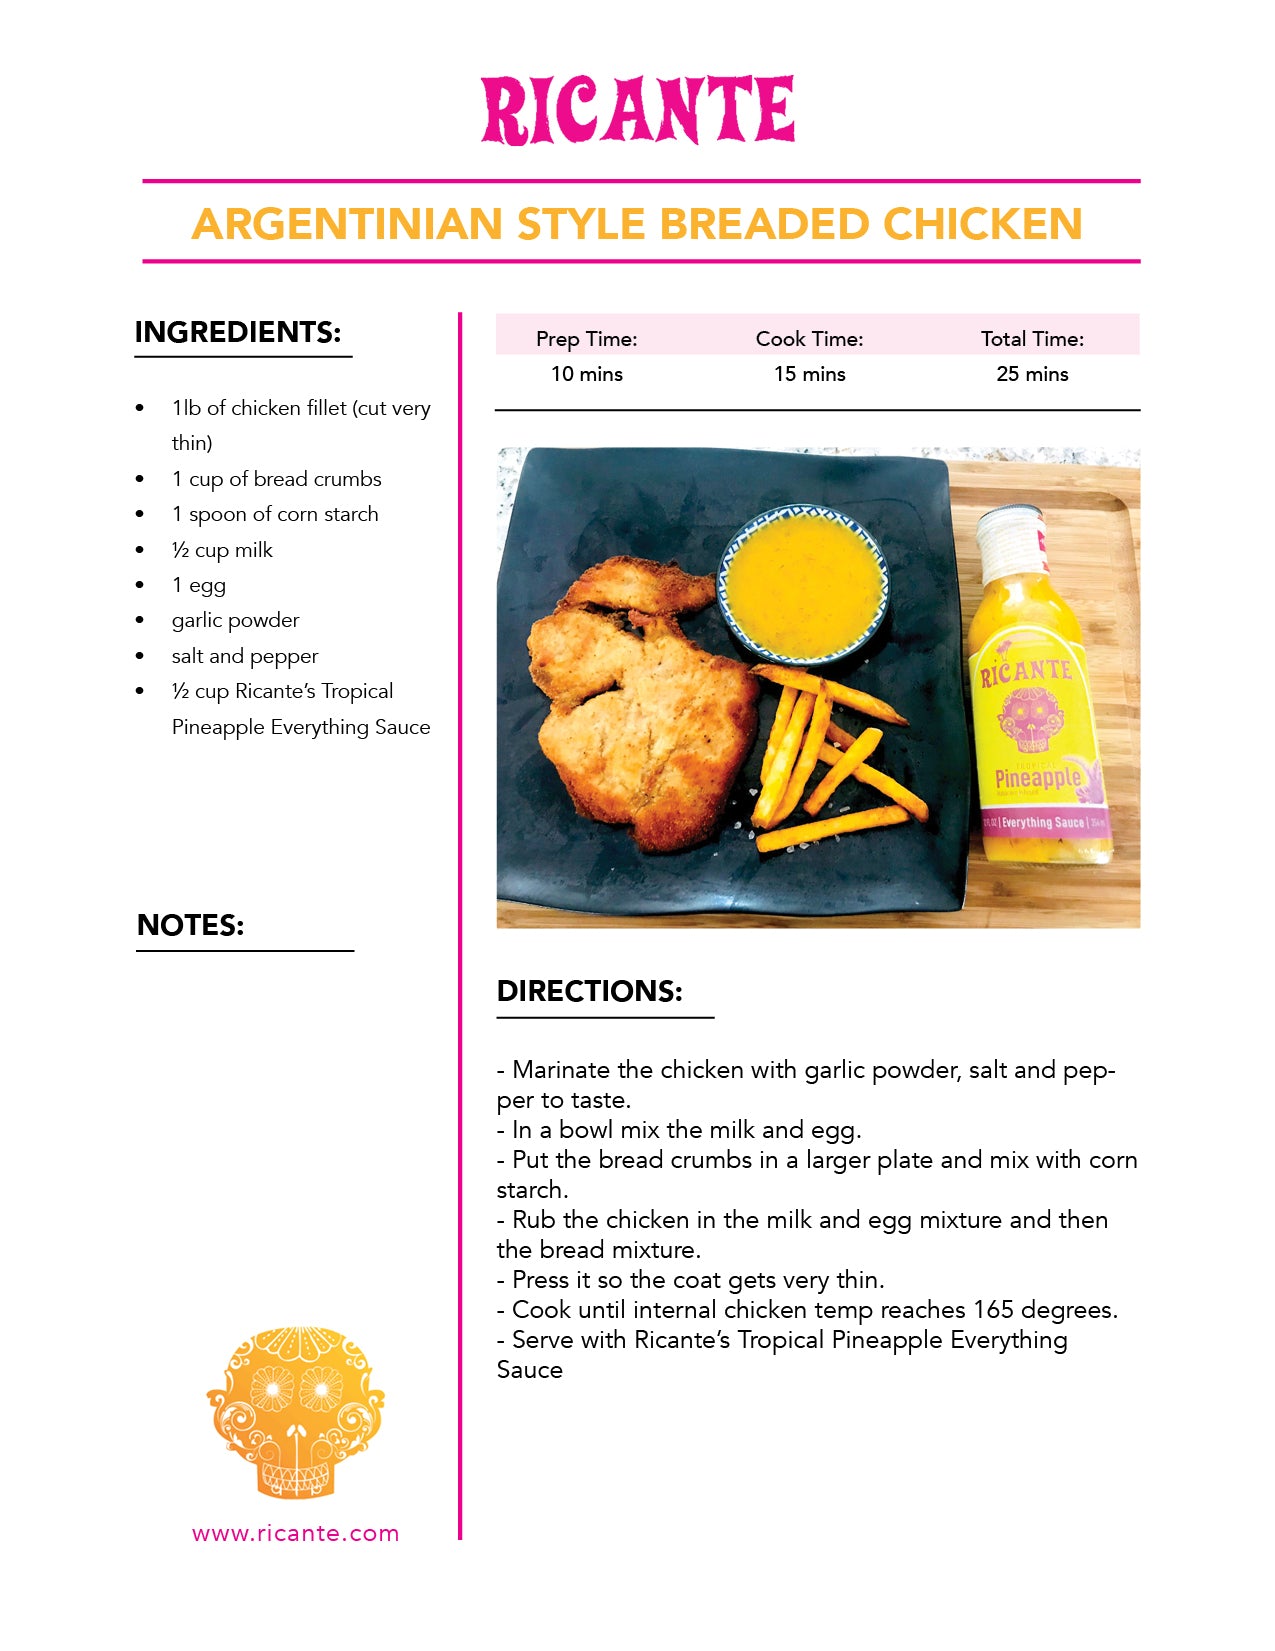 Argentinian Breaded Chicken